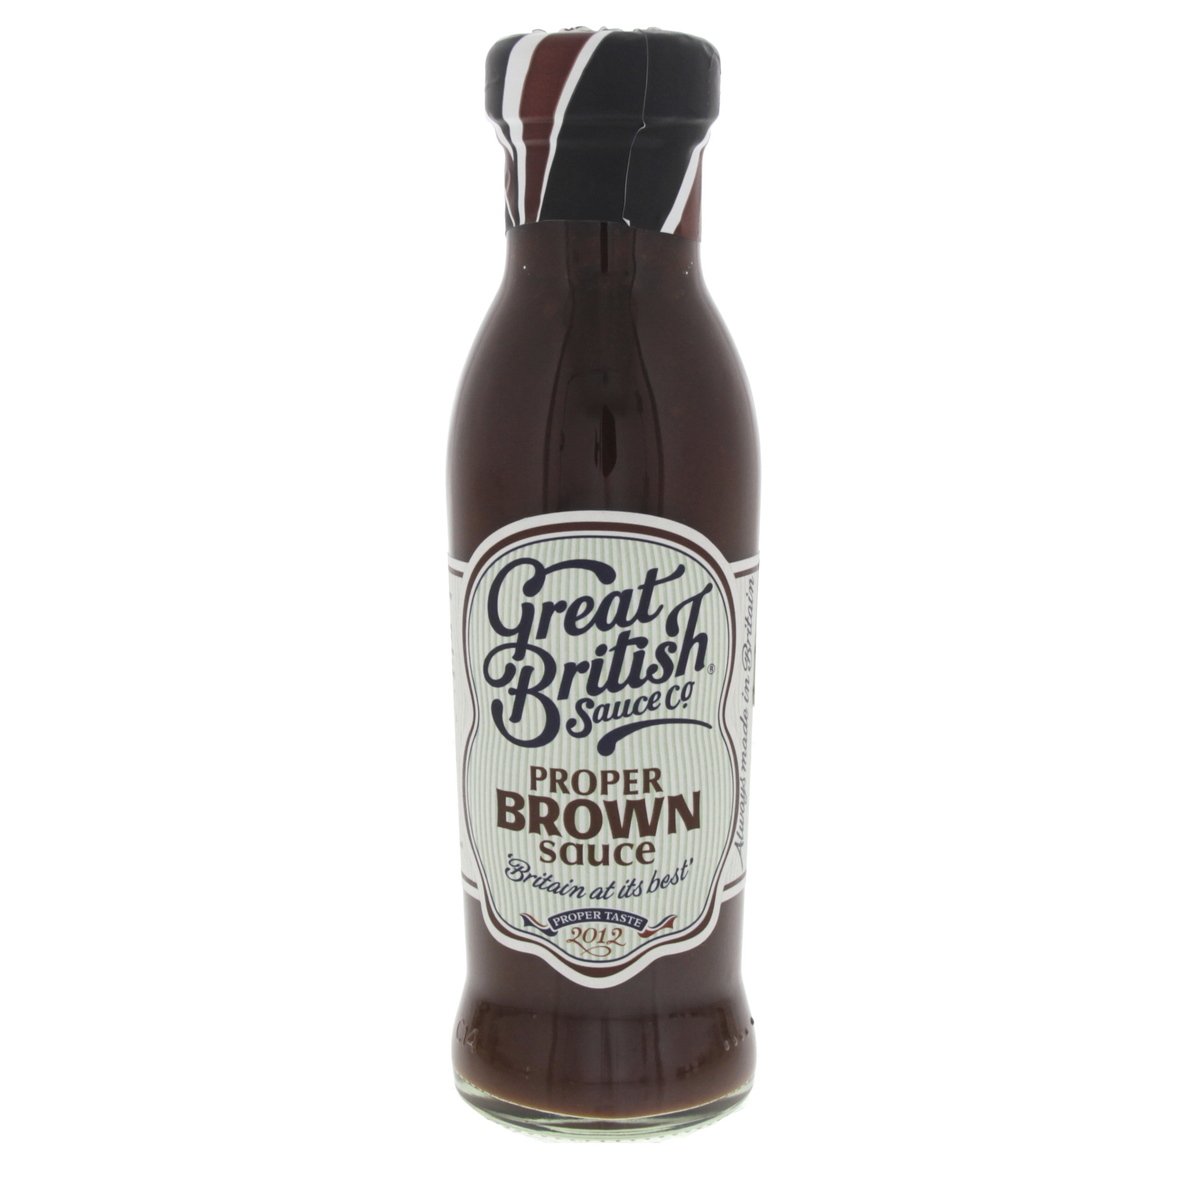 Great British Sauce Co Proper Brown Sauce 315 g